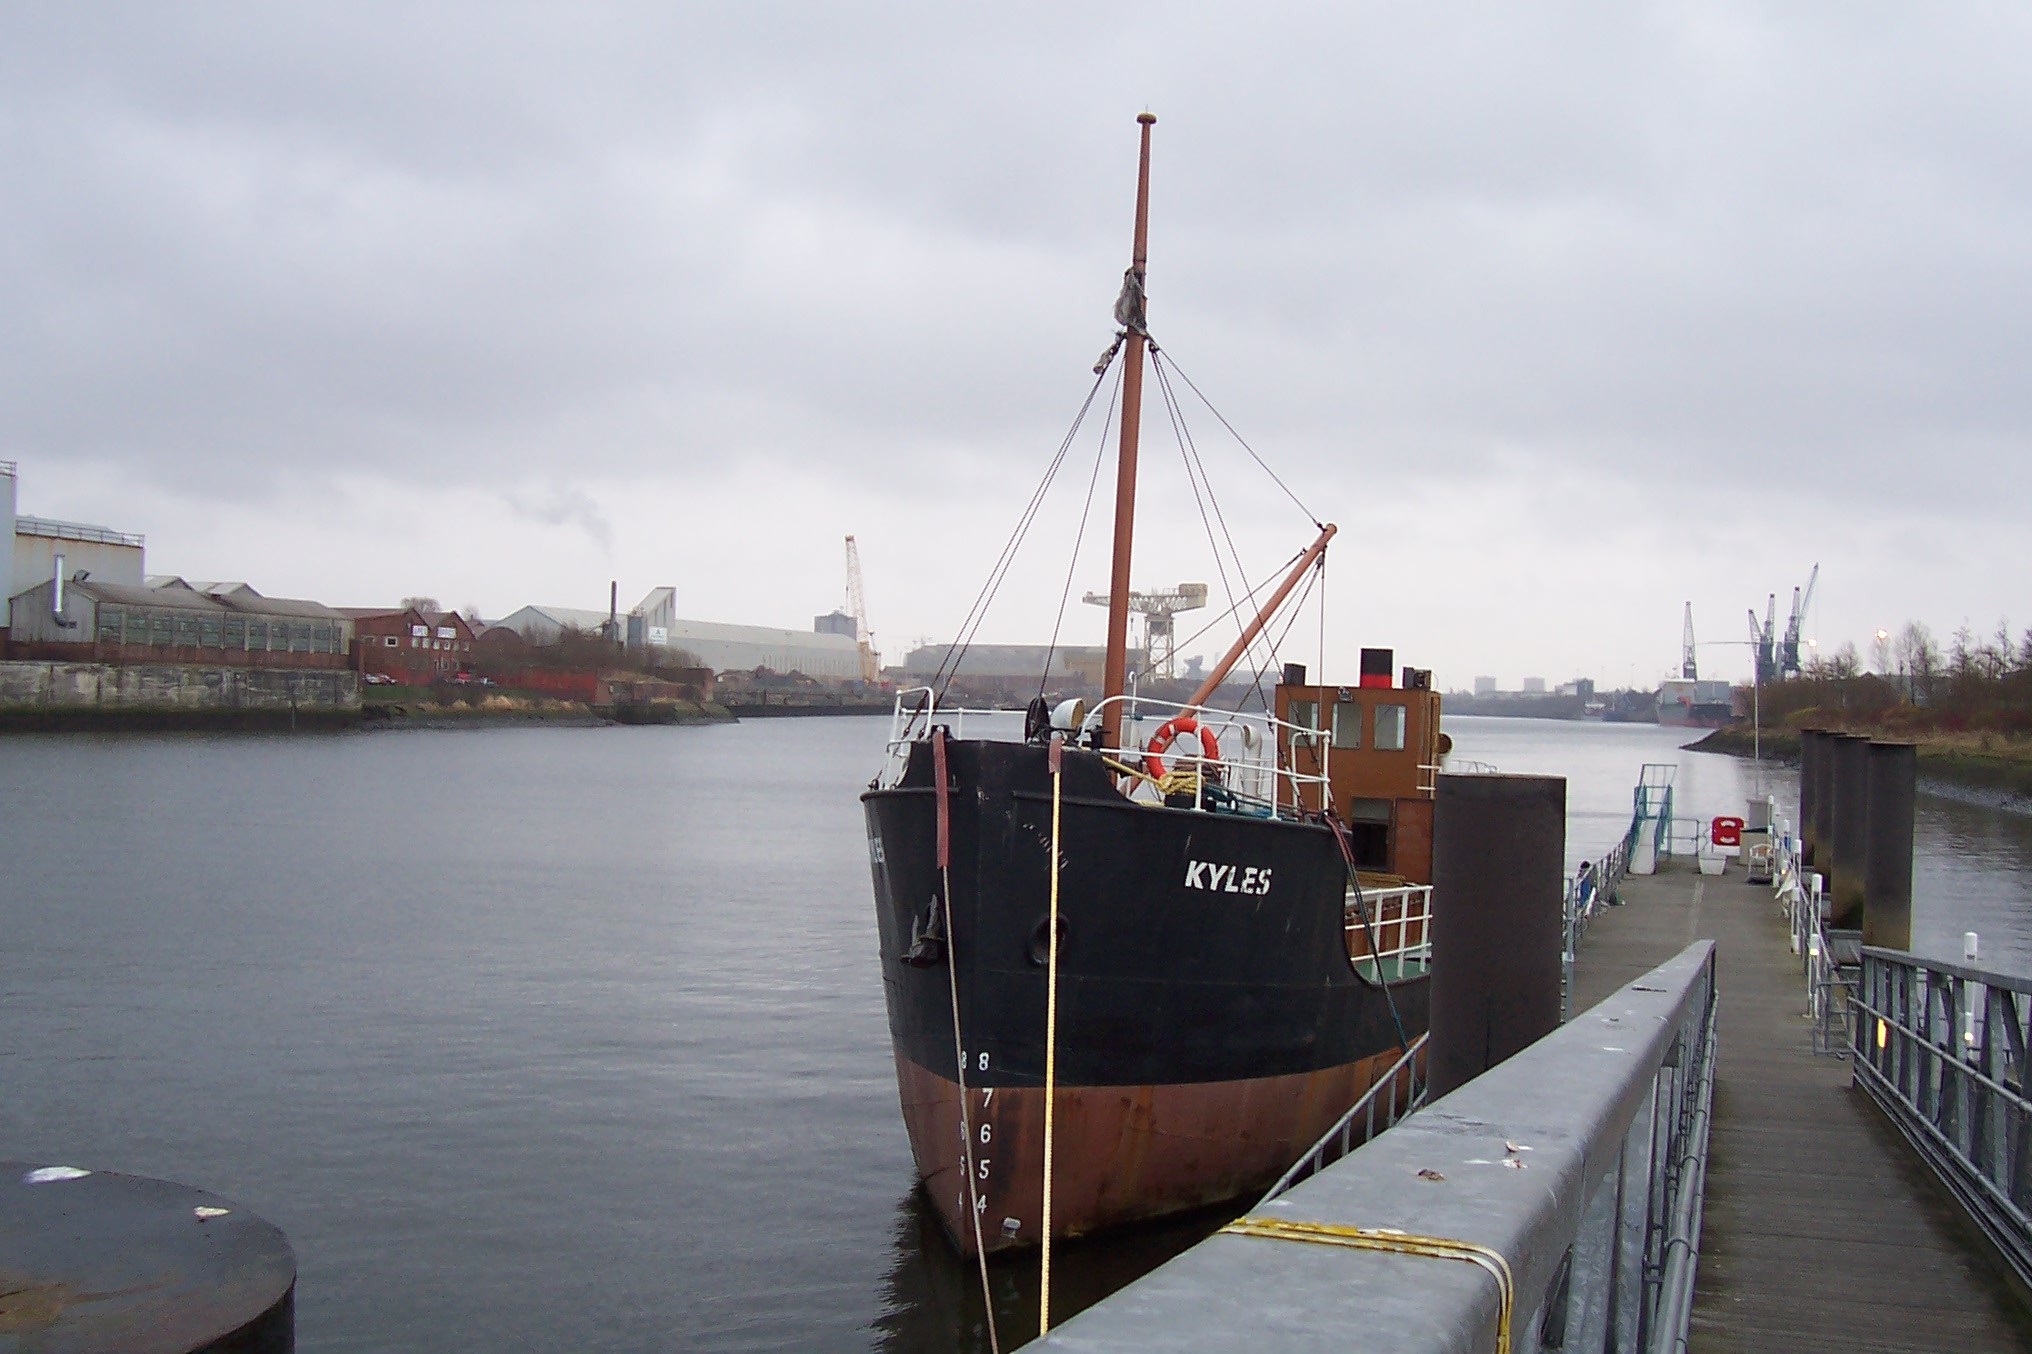 Kyles (c) National Historic Ships UK